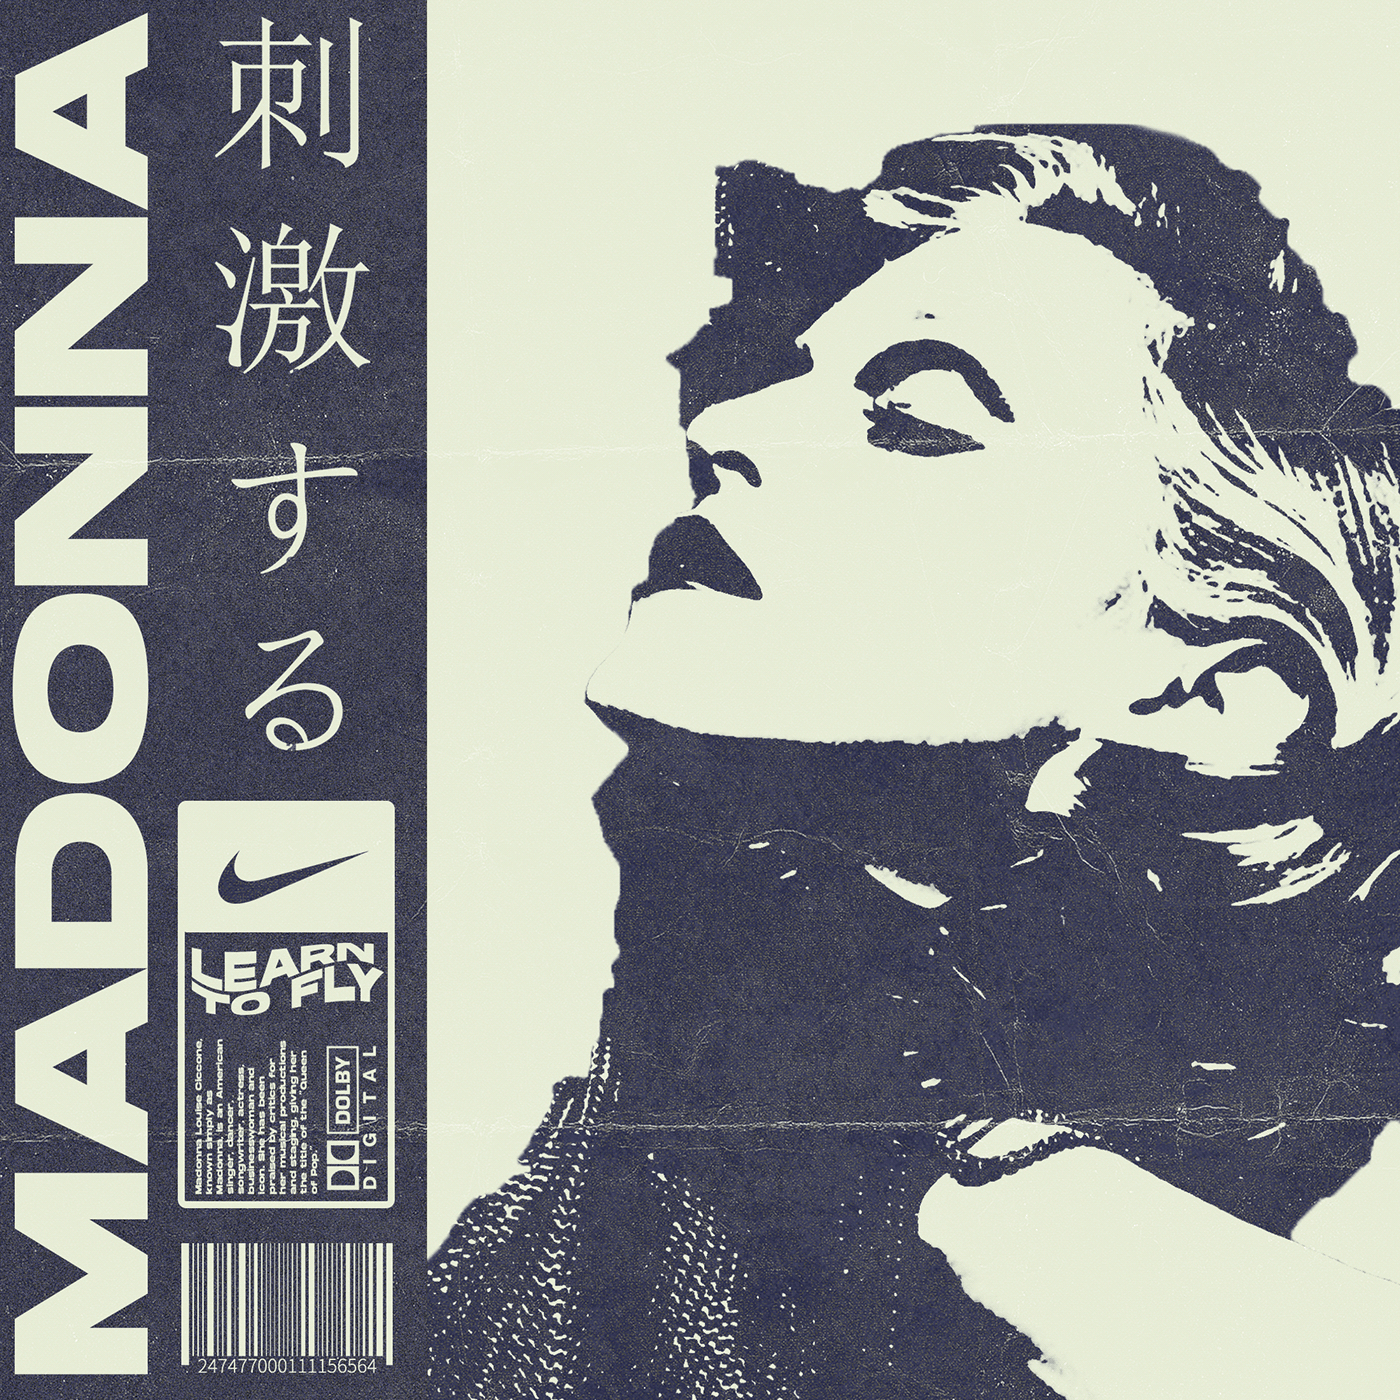 design identity Graphic Designer madonna cd vinyl music cover print DVD